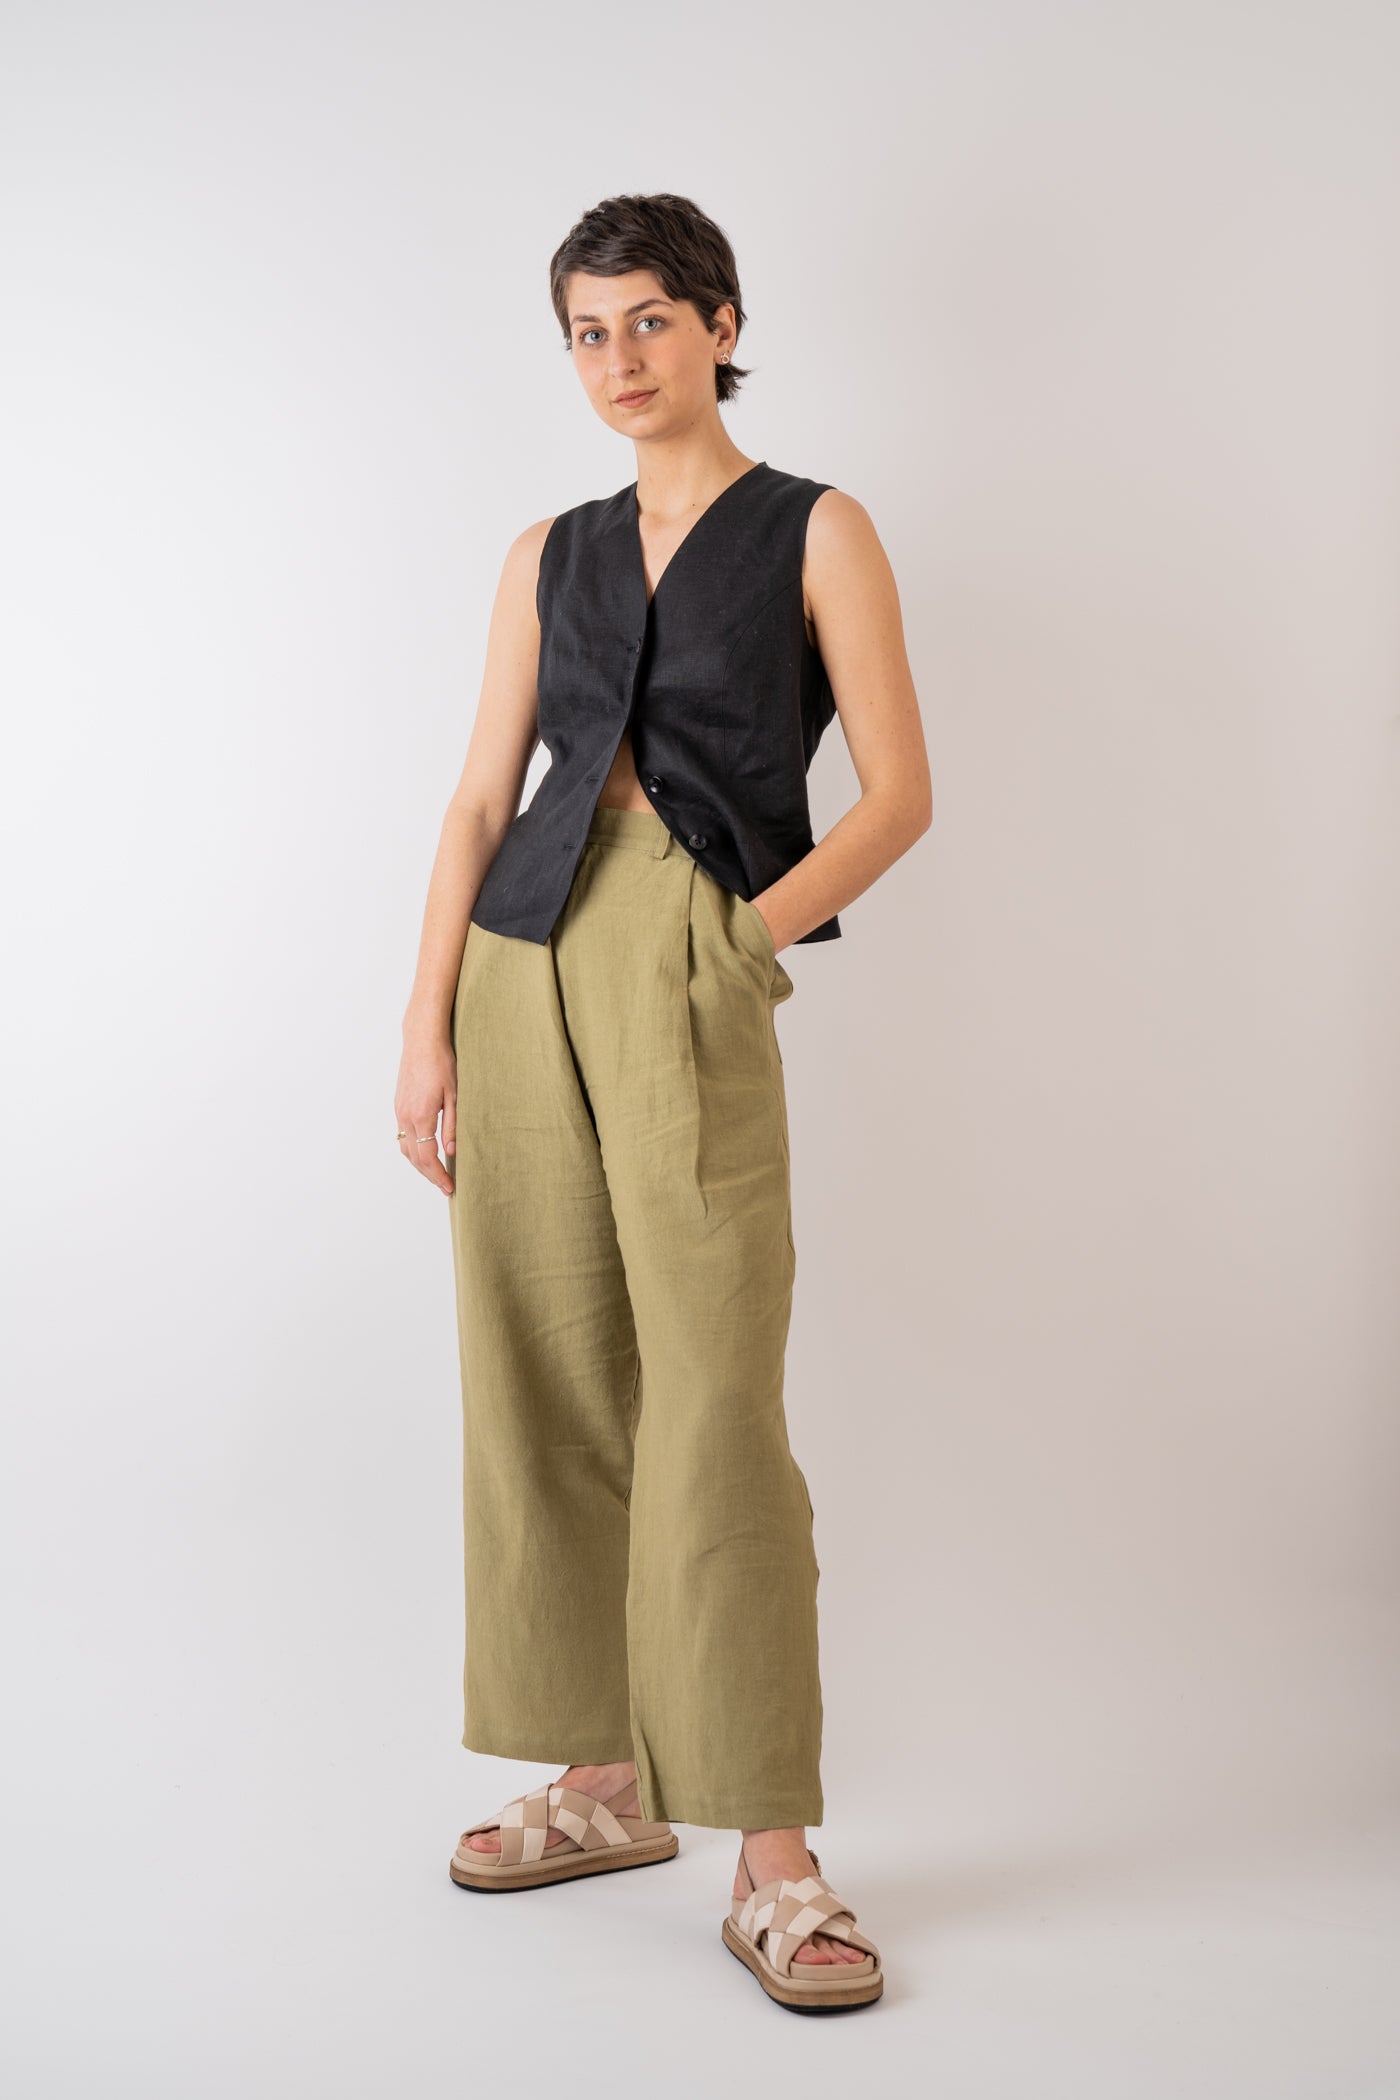 Cawley Studio 100% Linen Georgia Trouser styled with Xi Atelier Linen Avery Waistcoat in Black